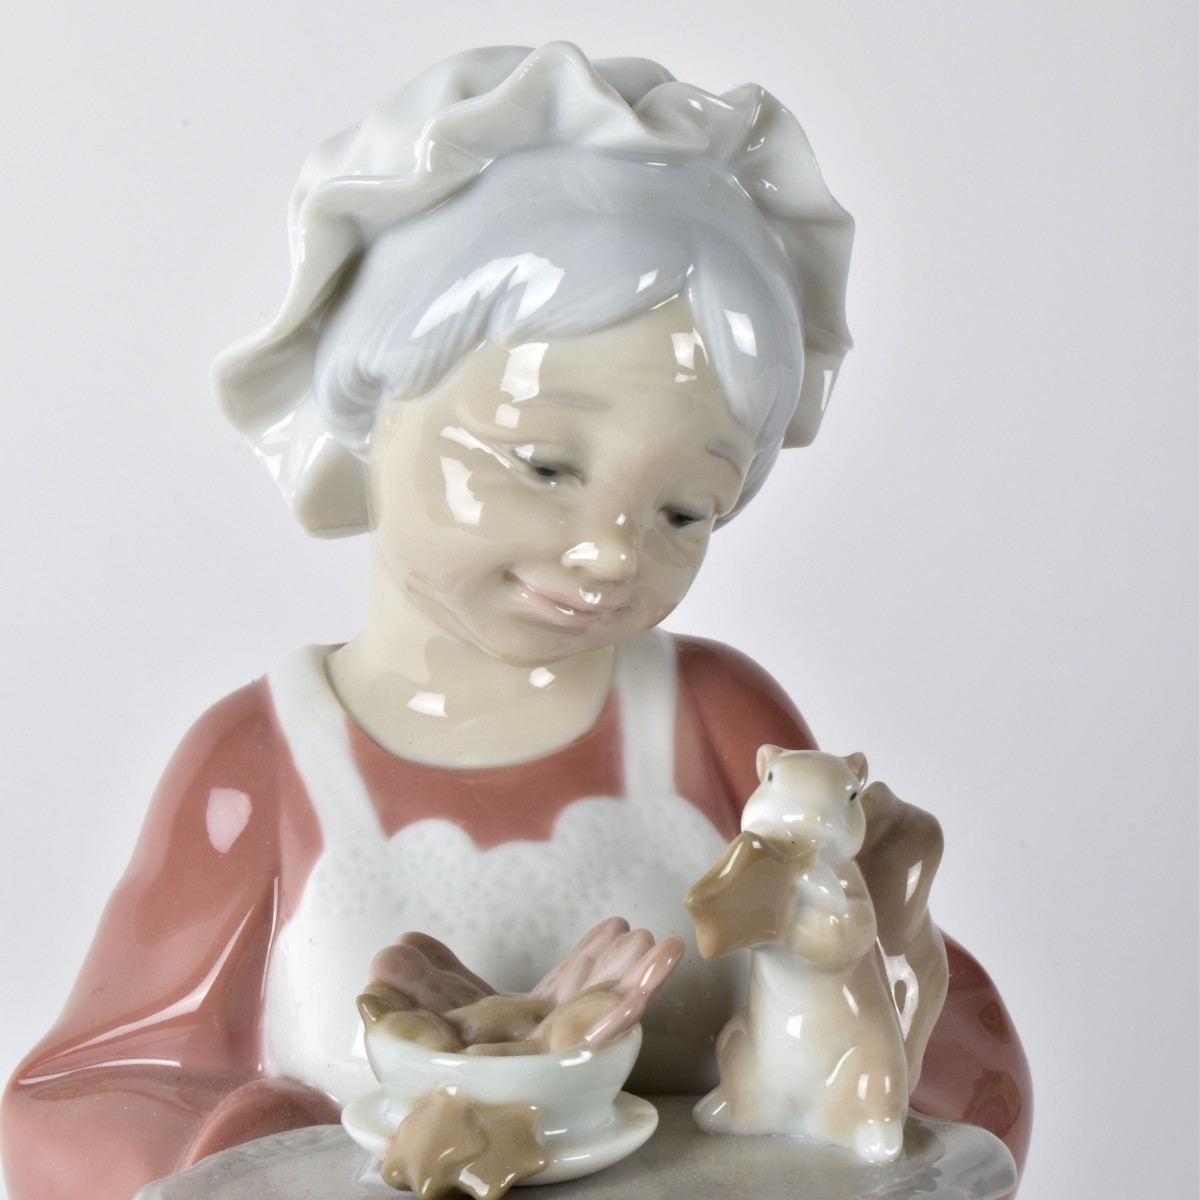 Lladro "Mrs. Santa Claus" Figurine